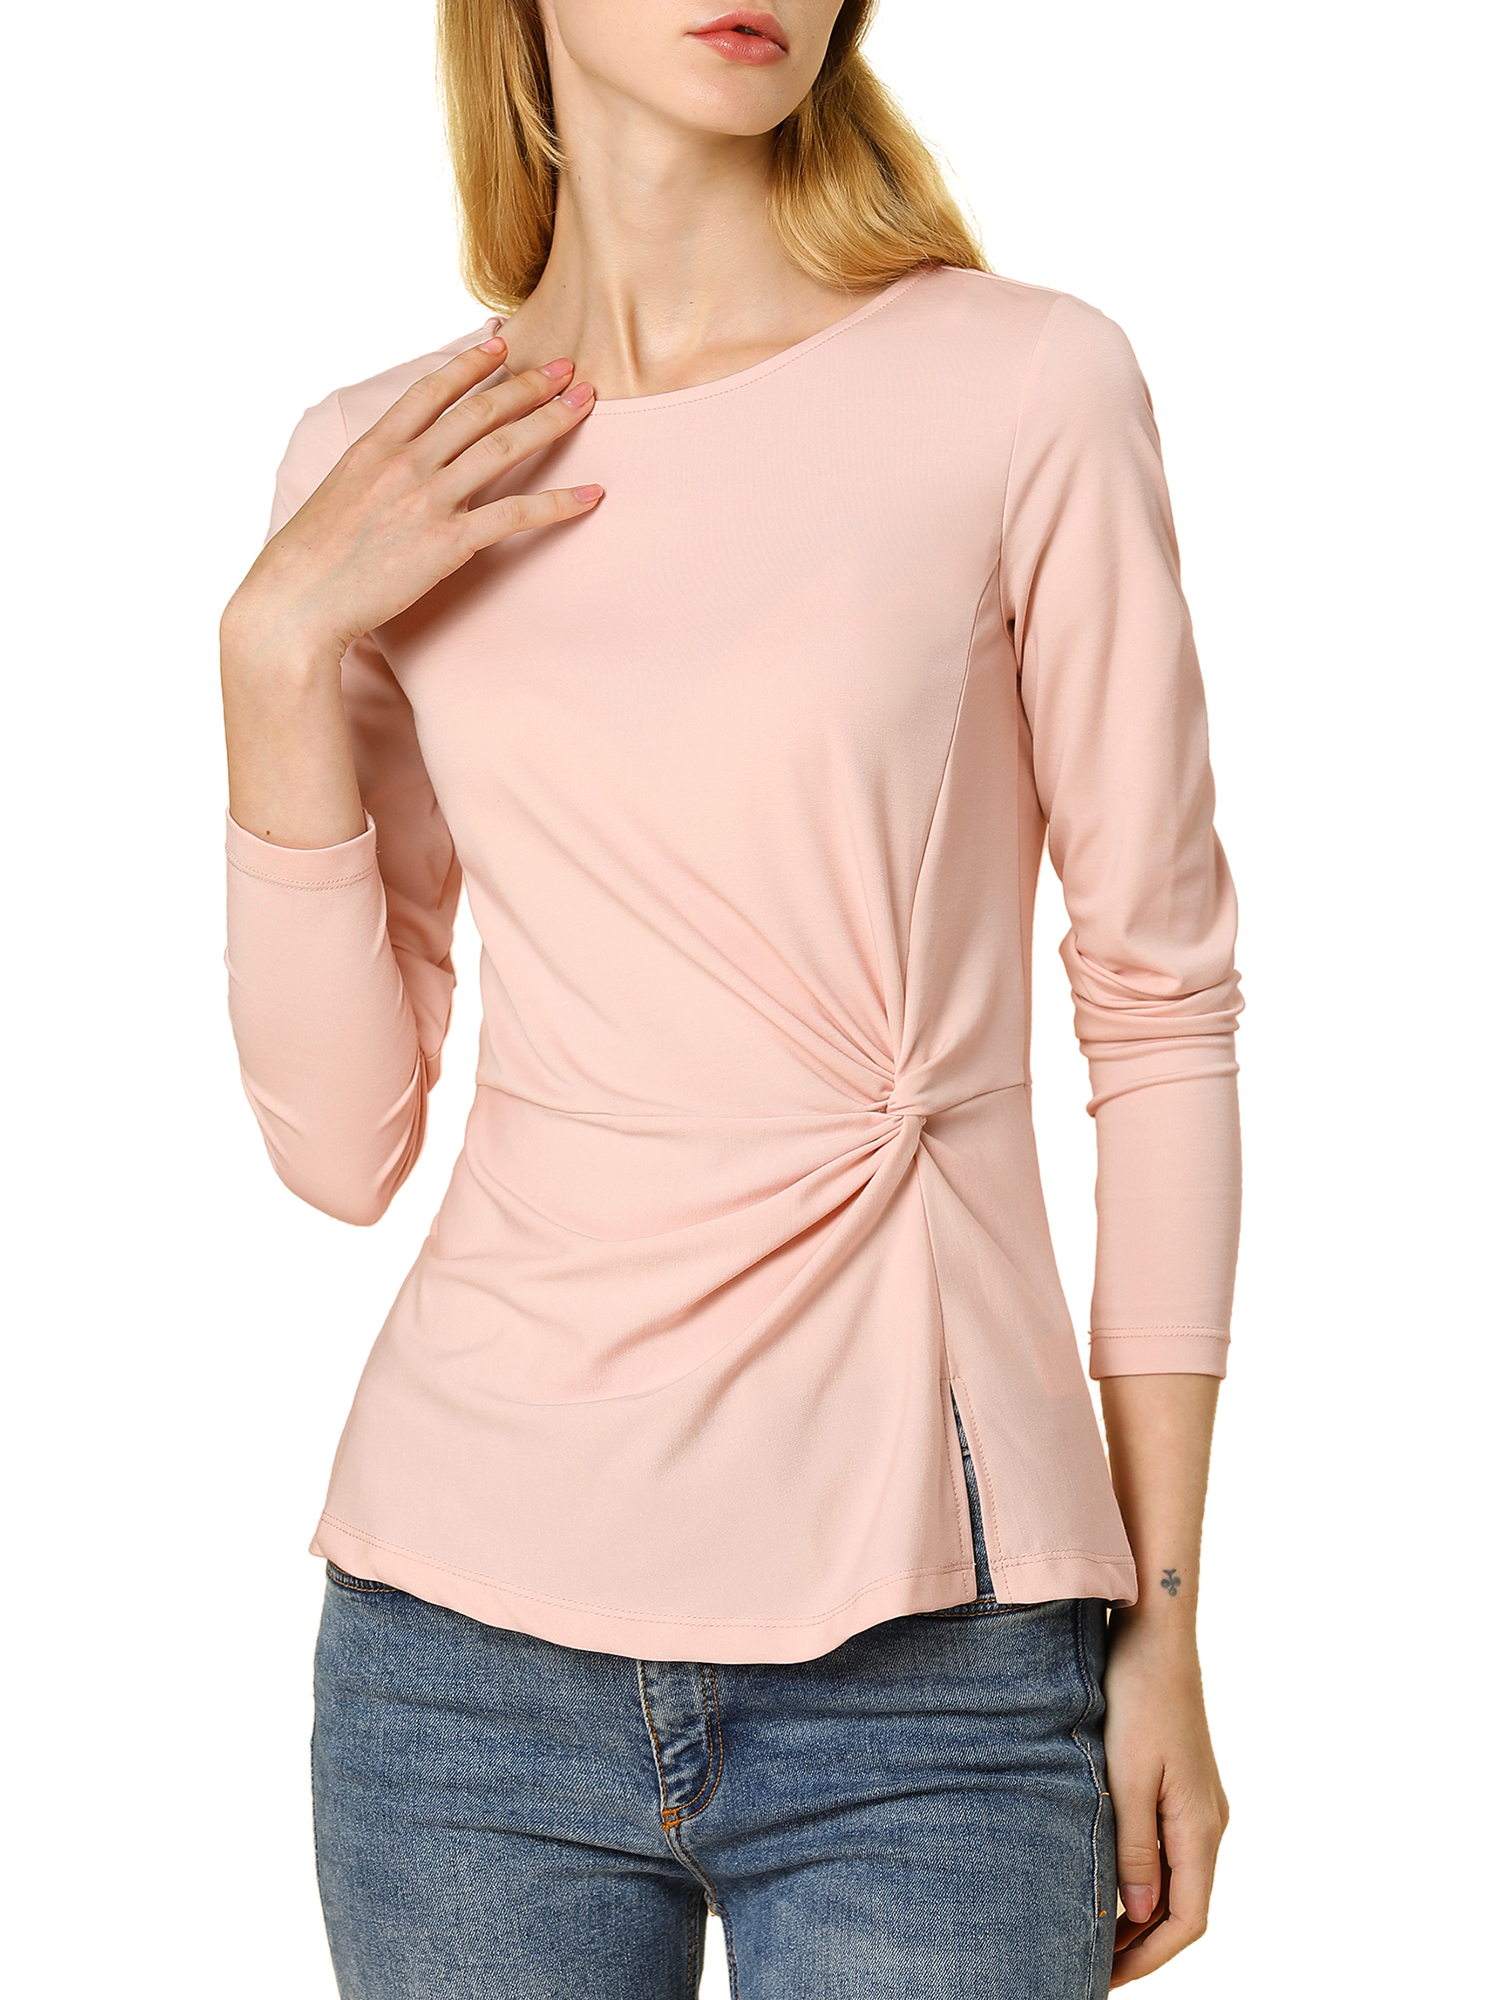 MODA NOVA Junior's Round Neck Tops Long Sleeve Blouse Shirt Pink M - image 5 of 6